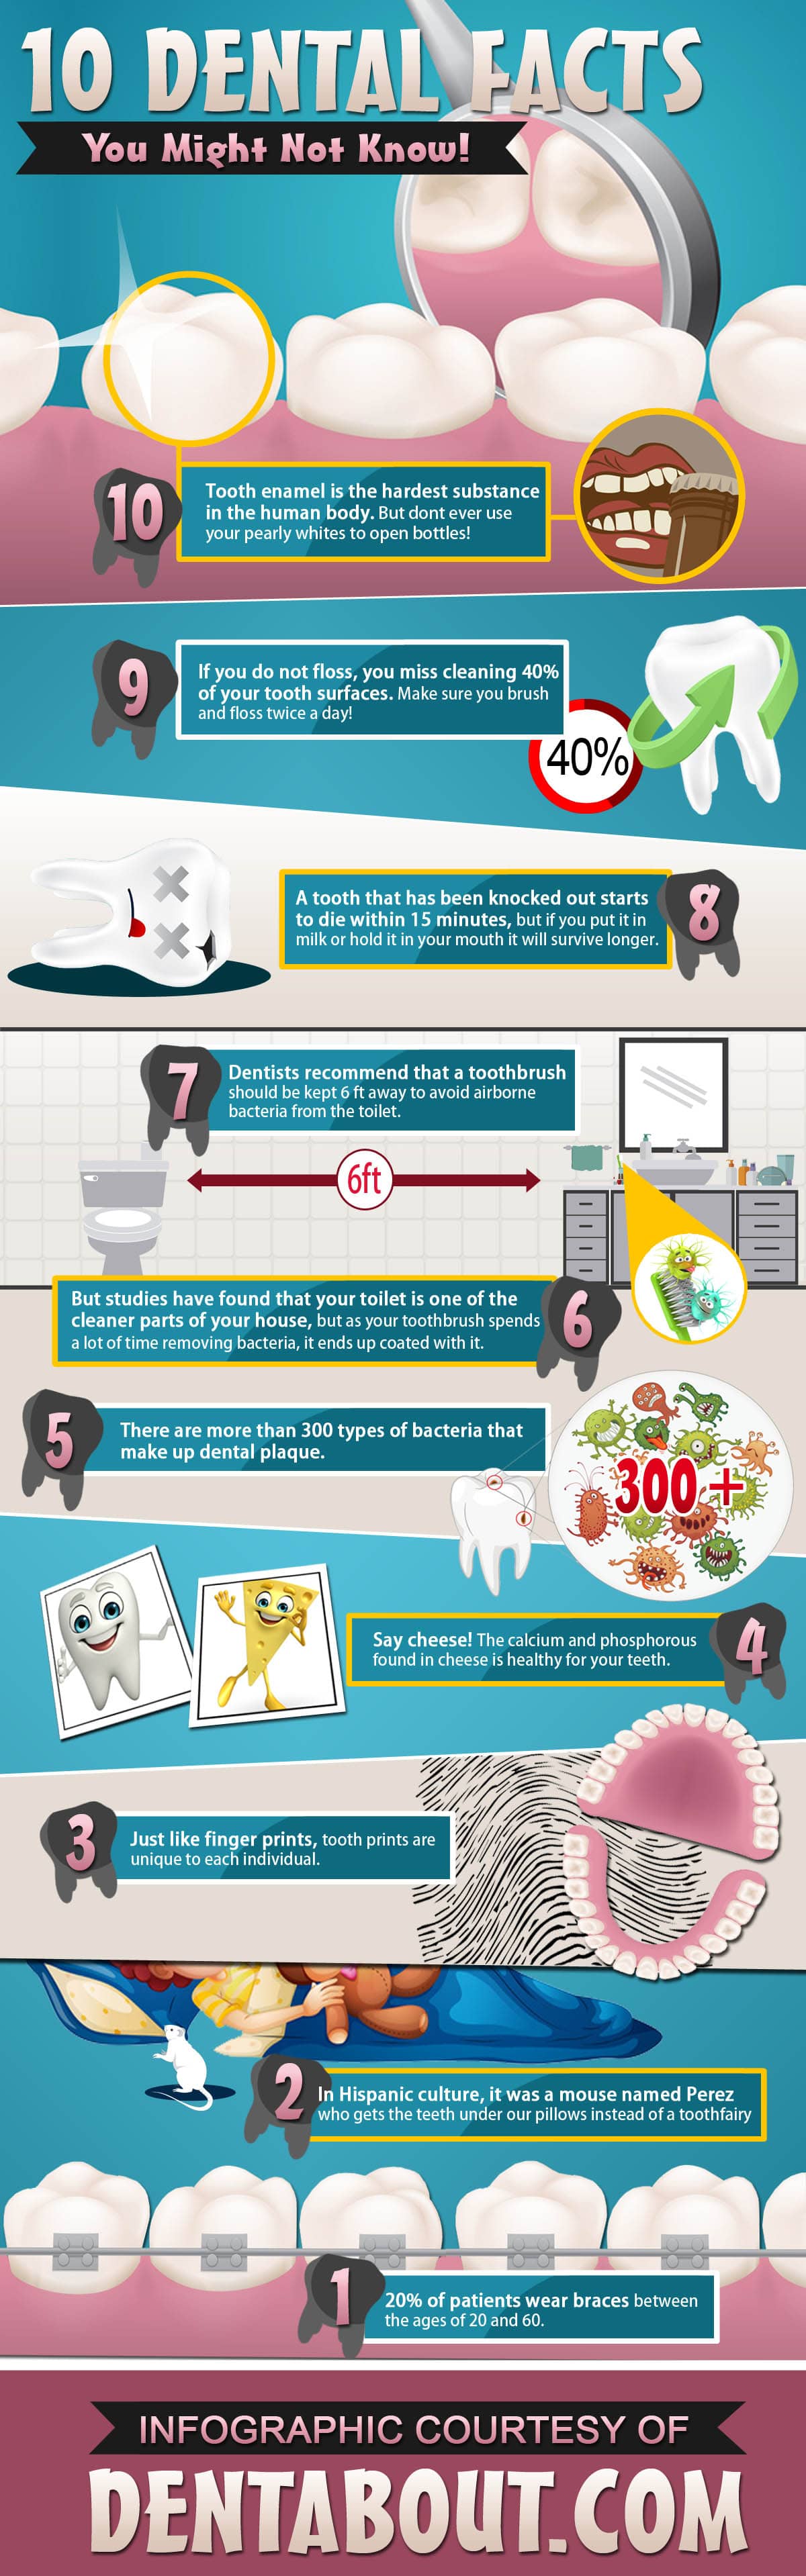 10 Dental Facts